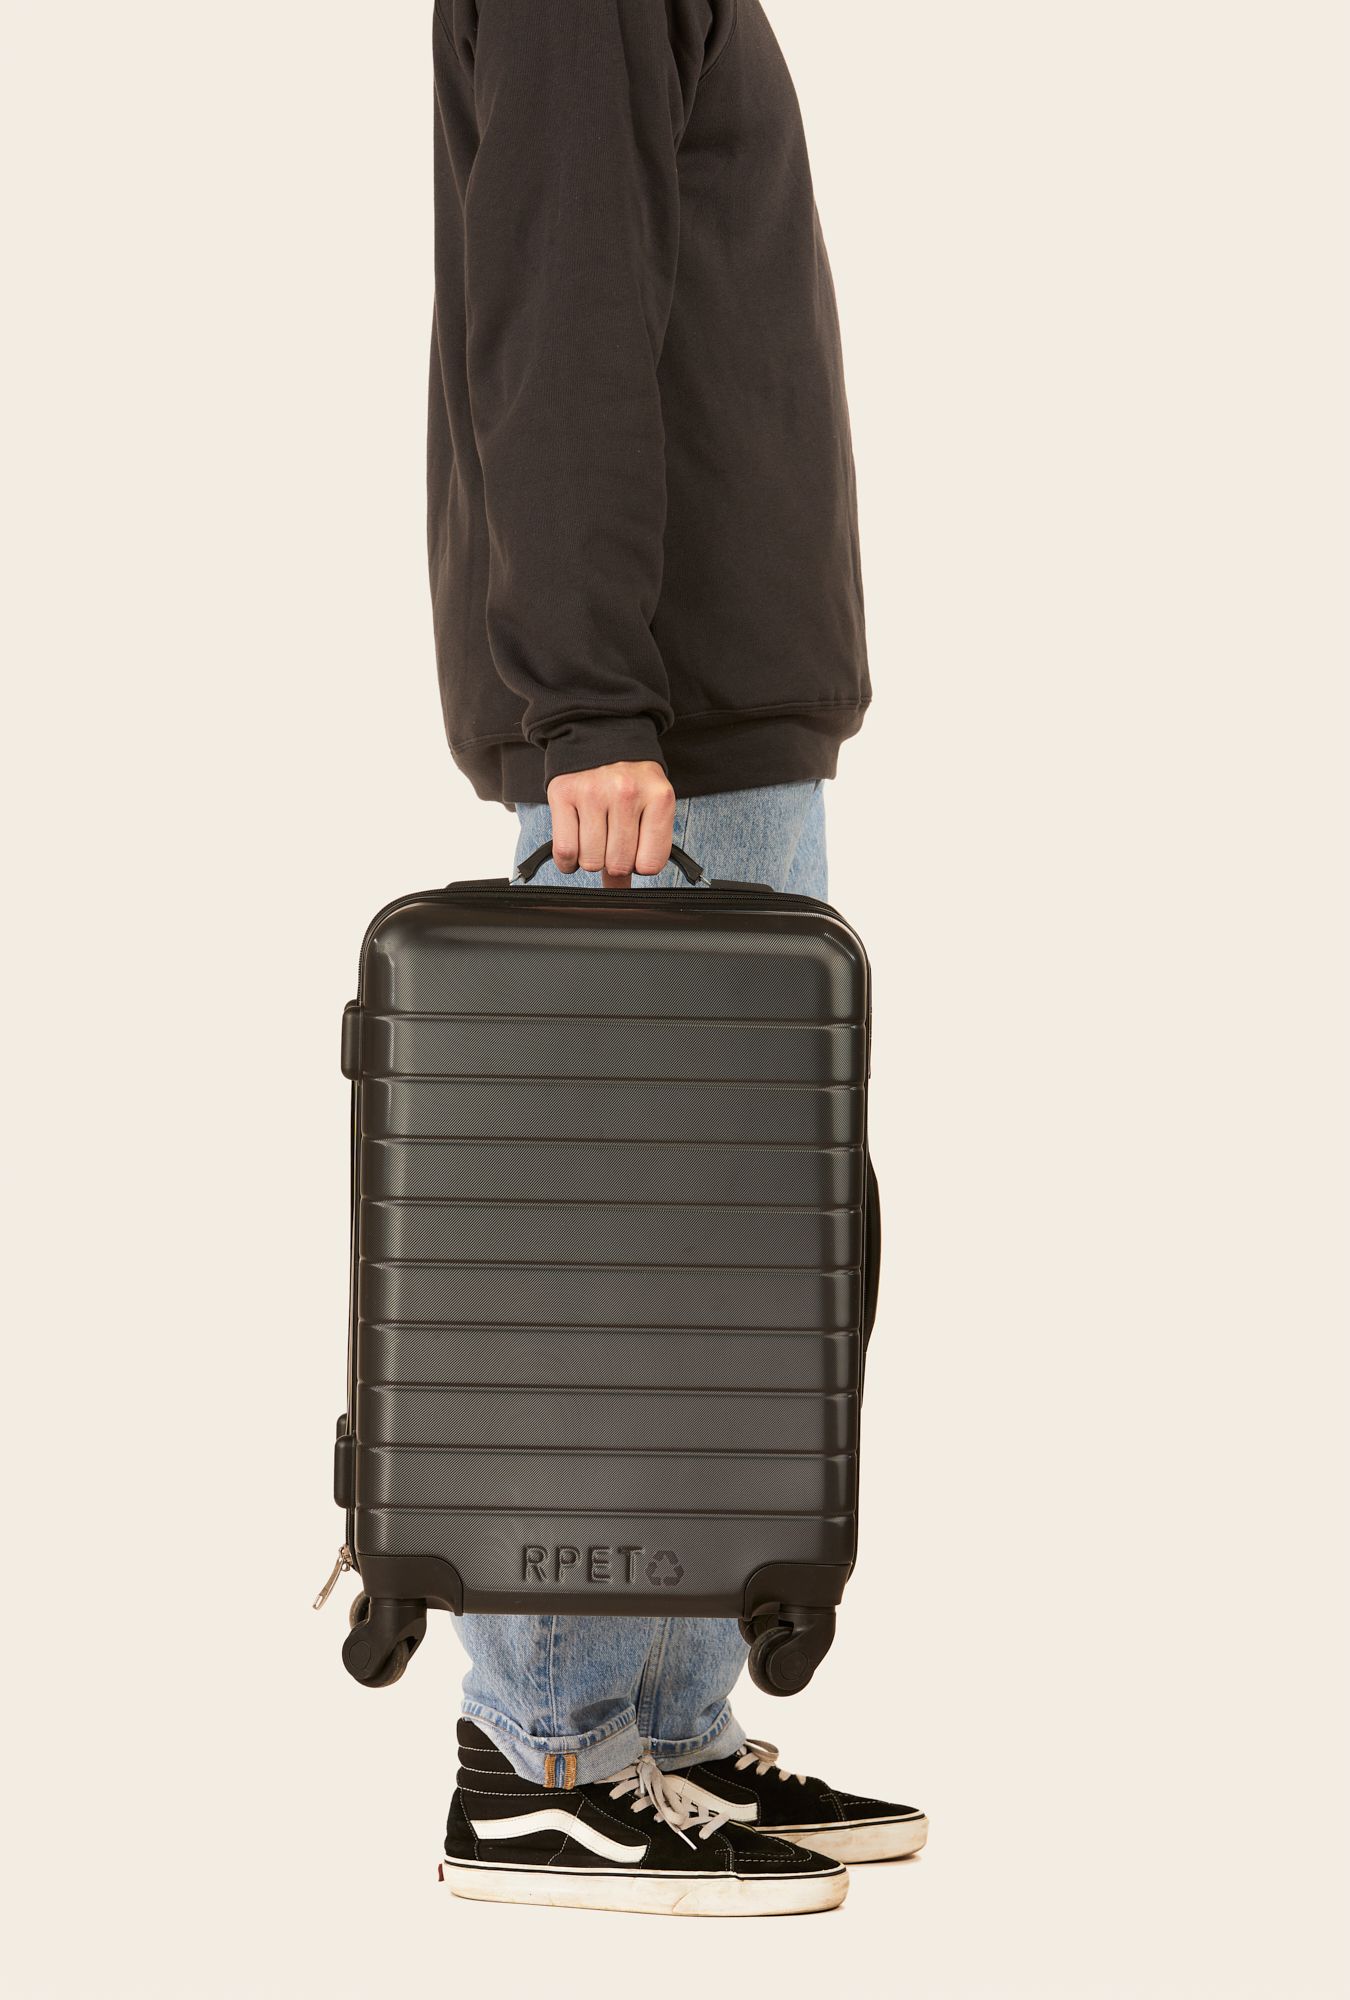 Custom Rpet suitcase